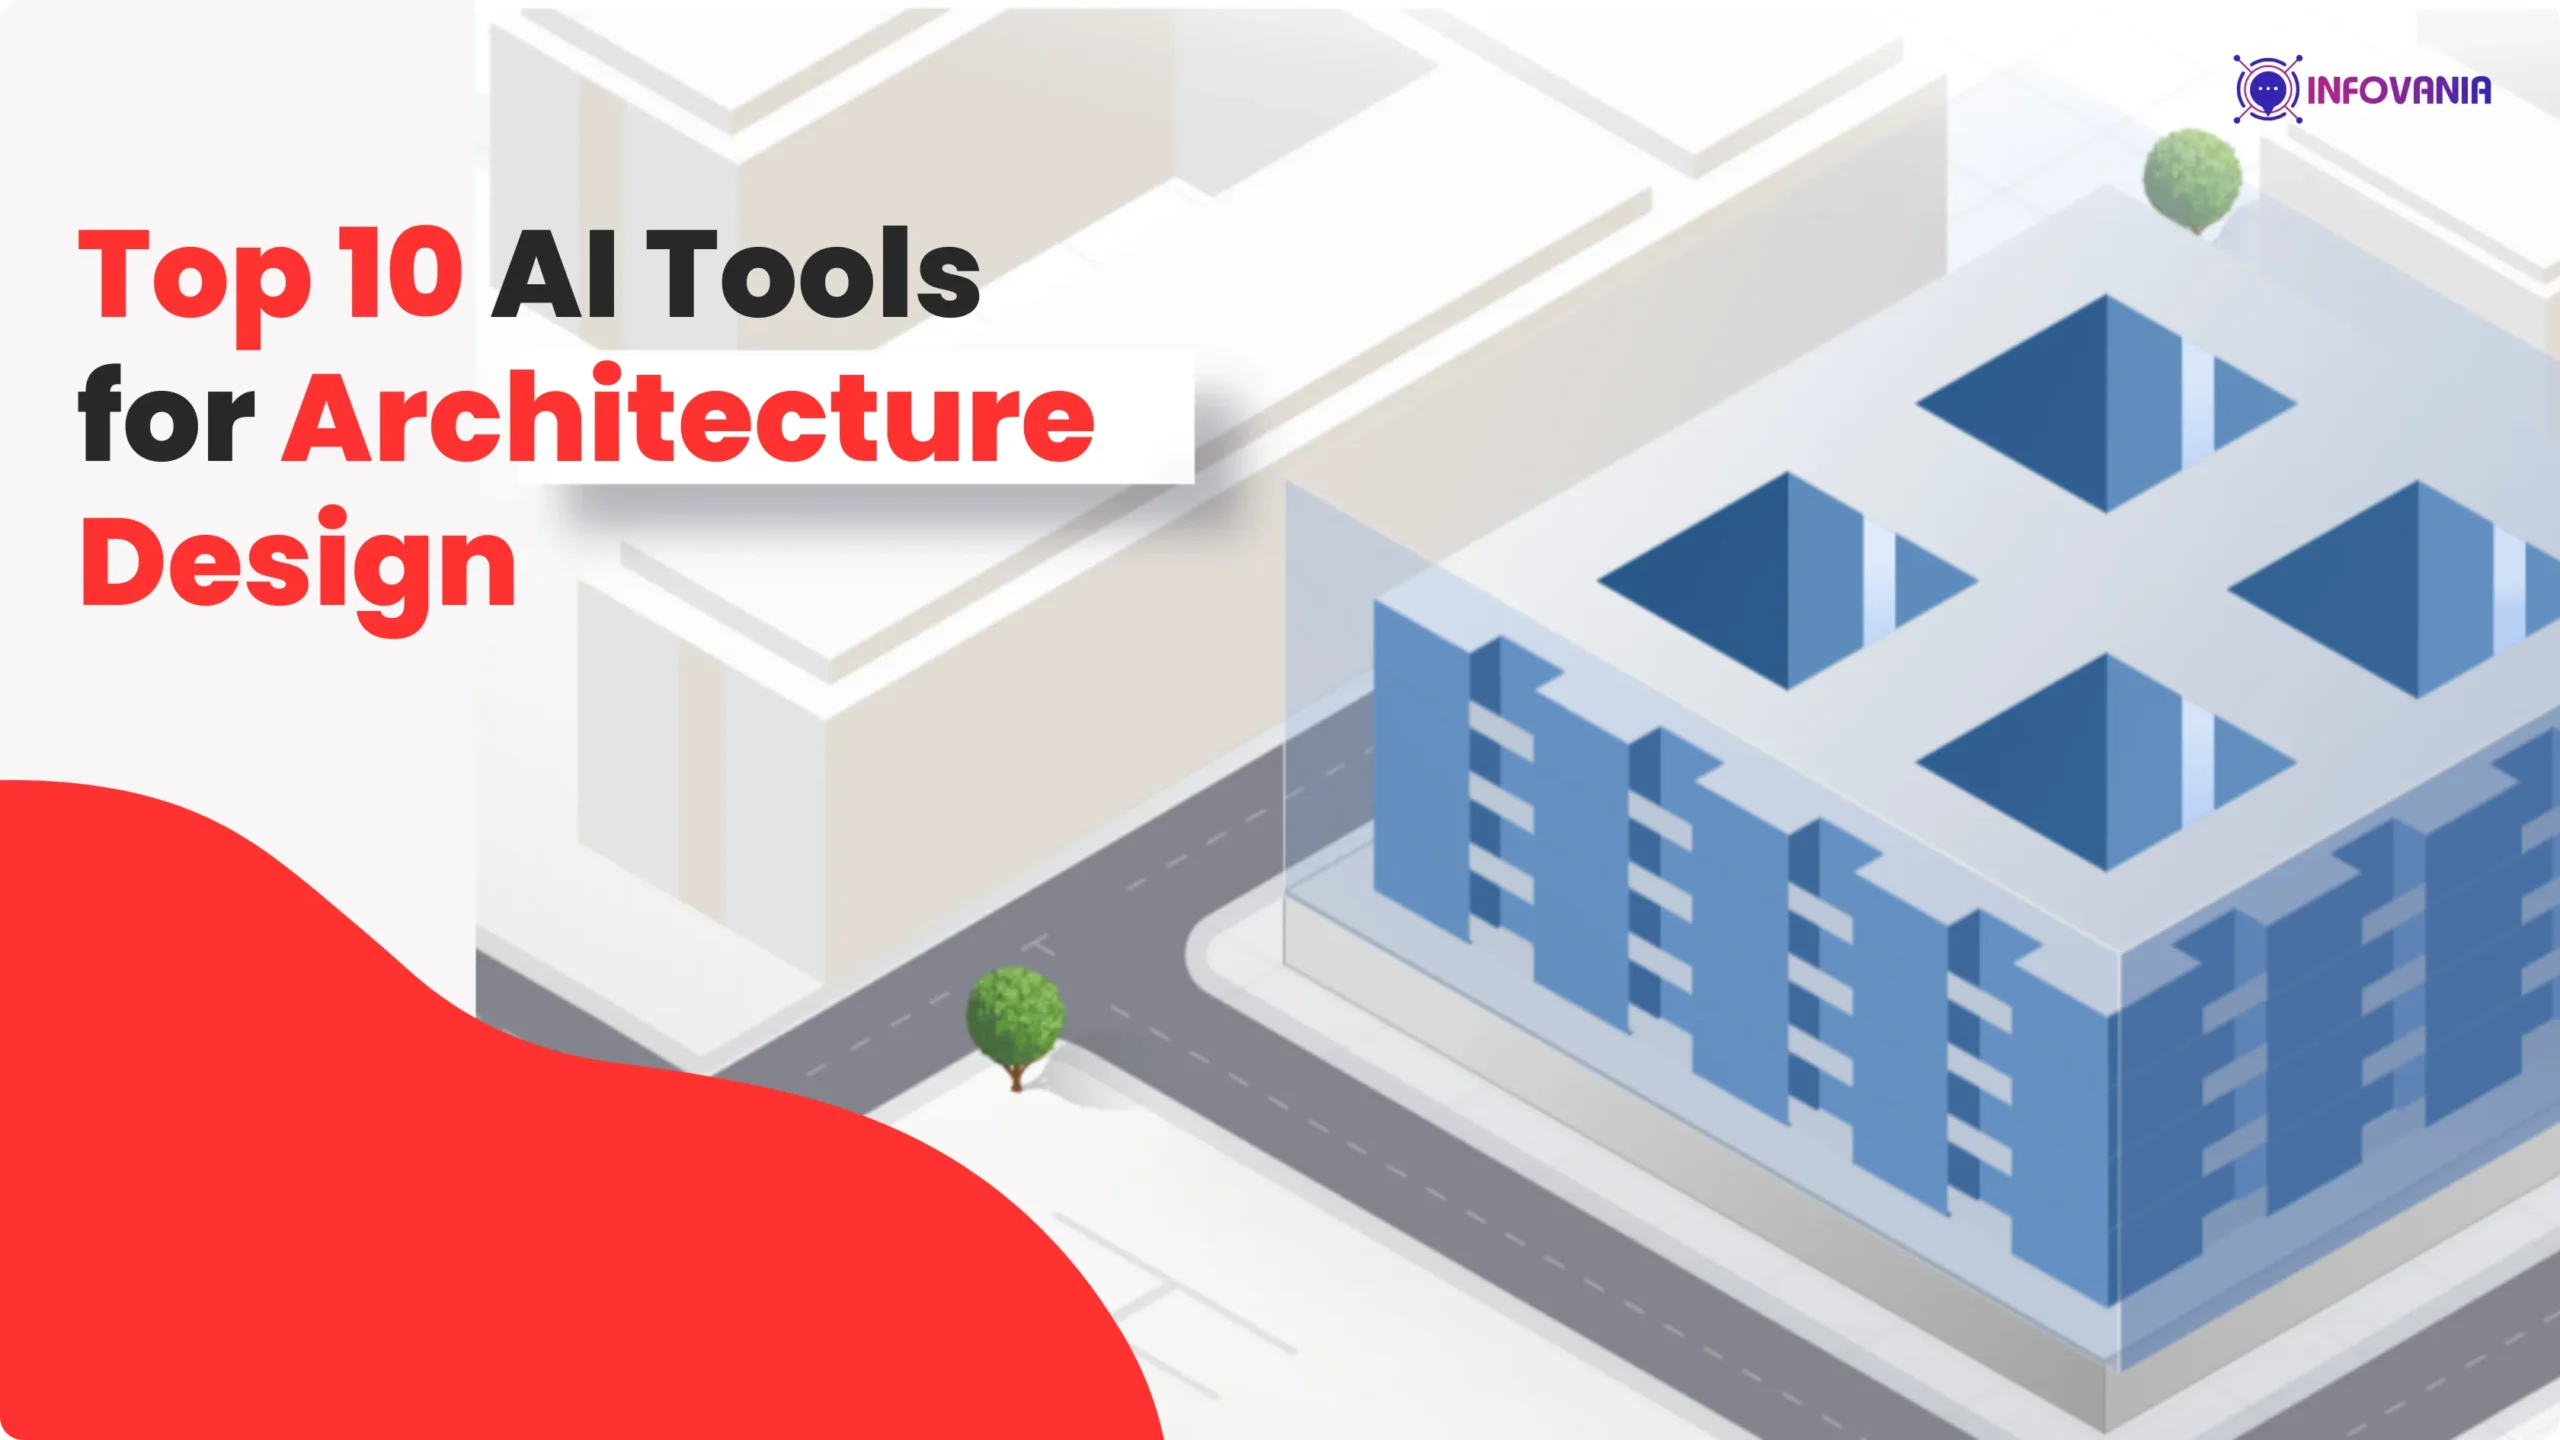 Top 10 AI Tools for Architecture Design